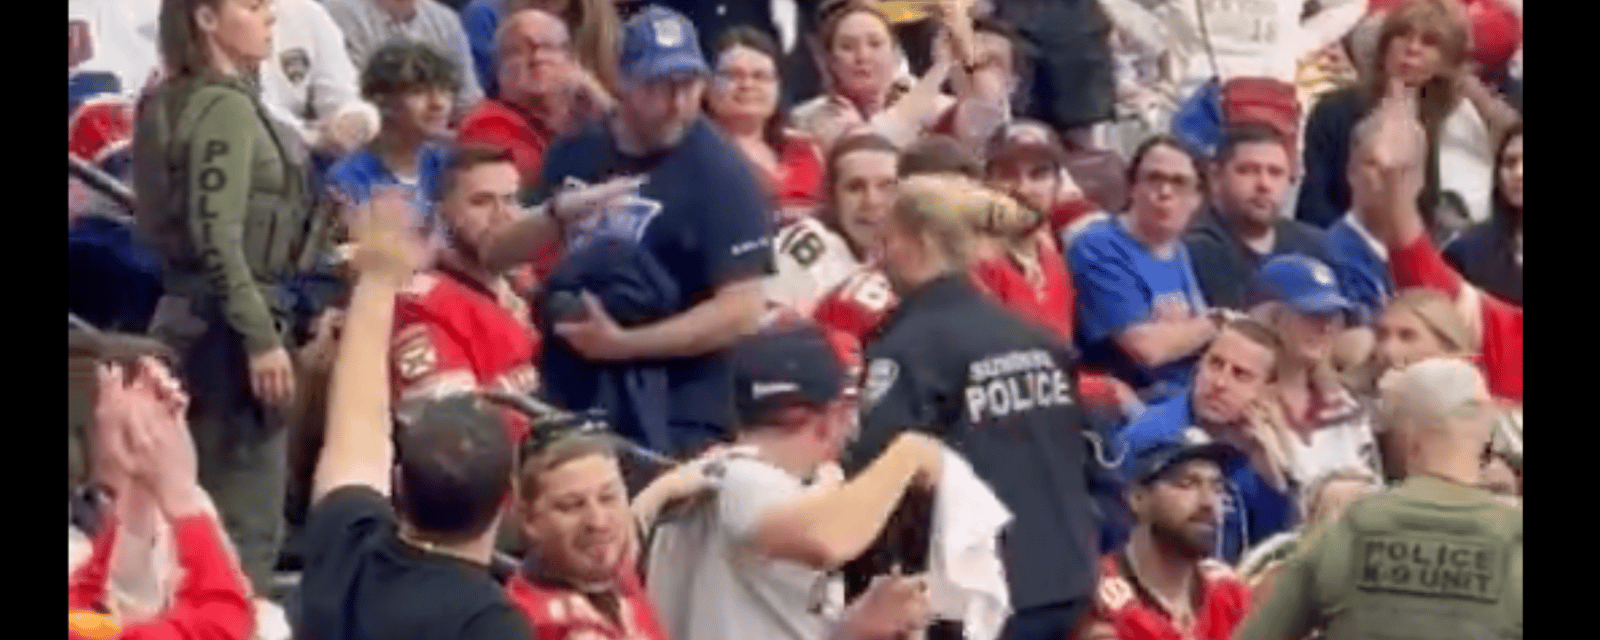 Panthers fans jeer Rangers fan ejected by police 